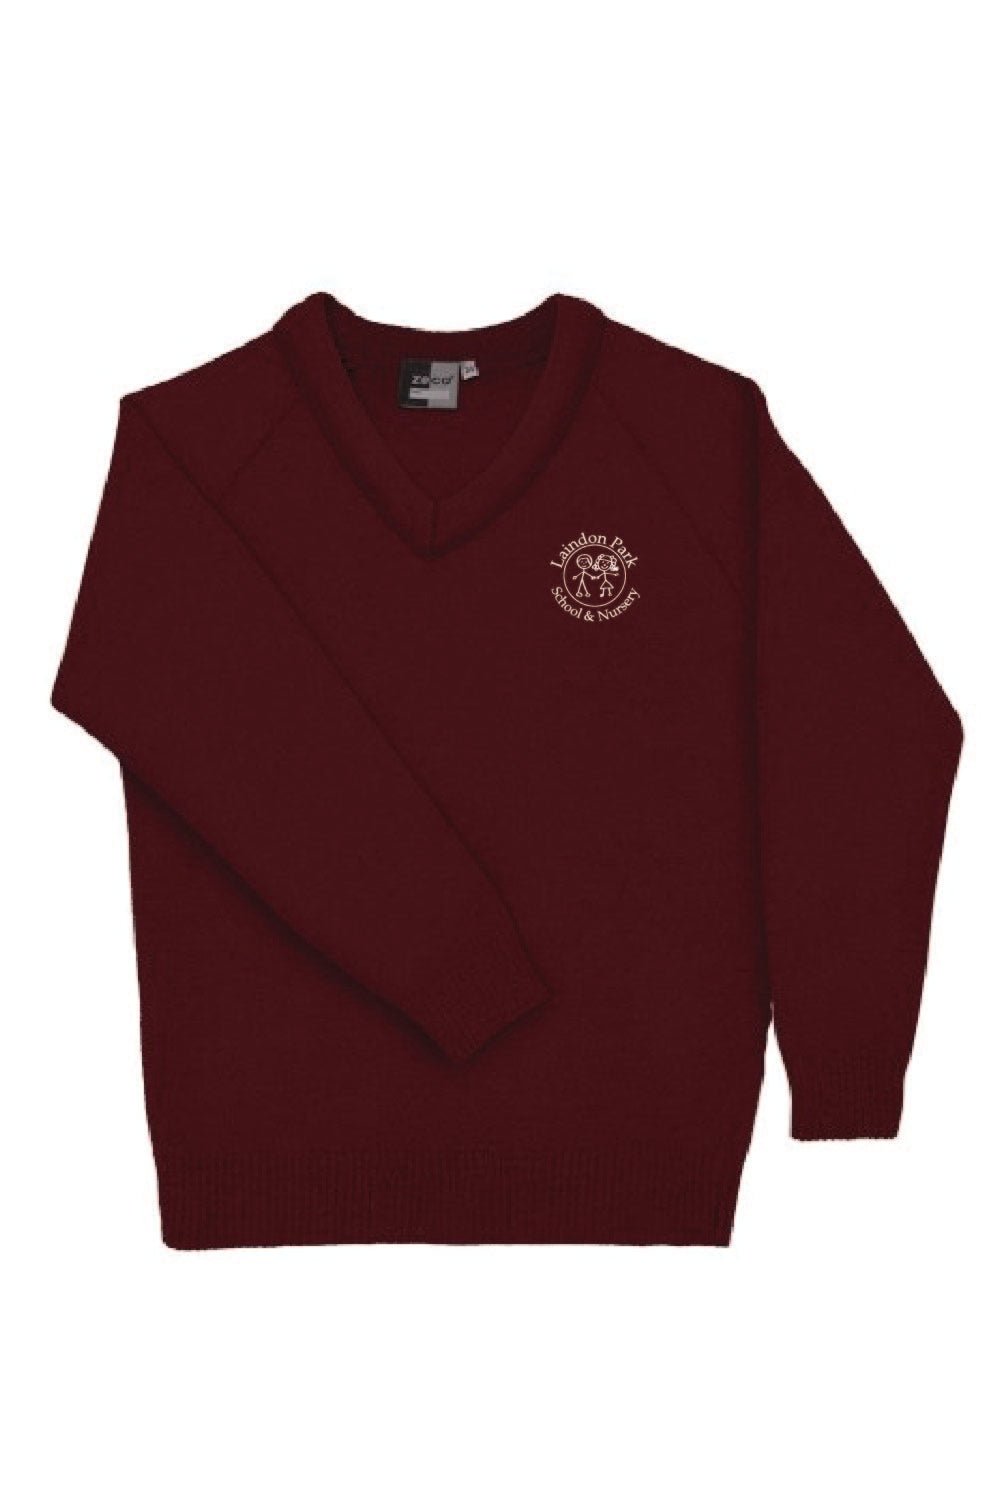 Laindon Park Knitted Jumper - Uniformwise Schoolwear